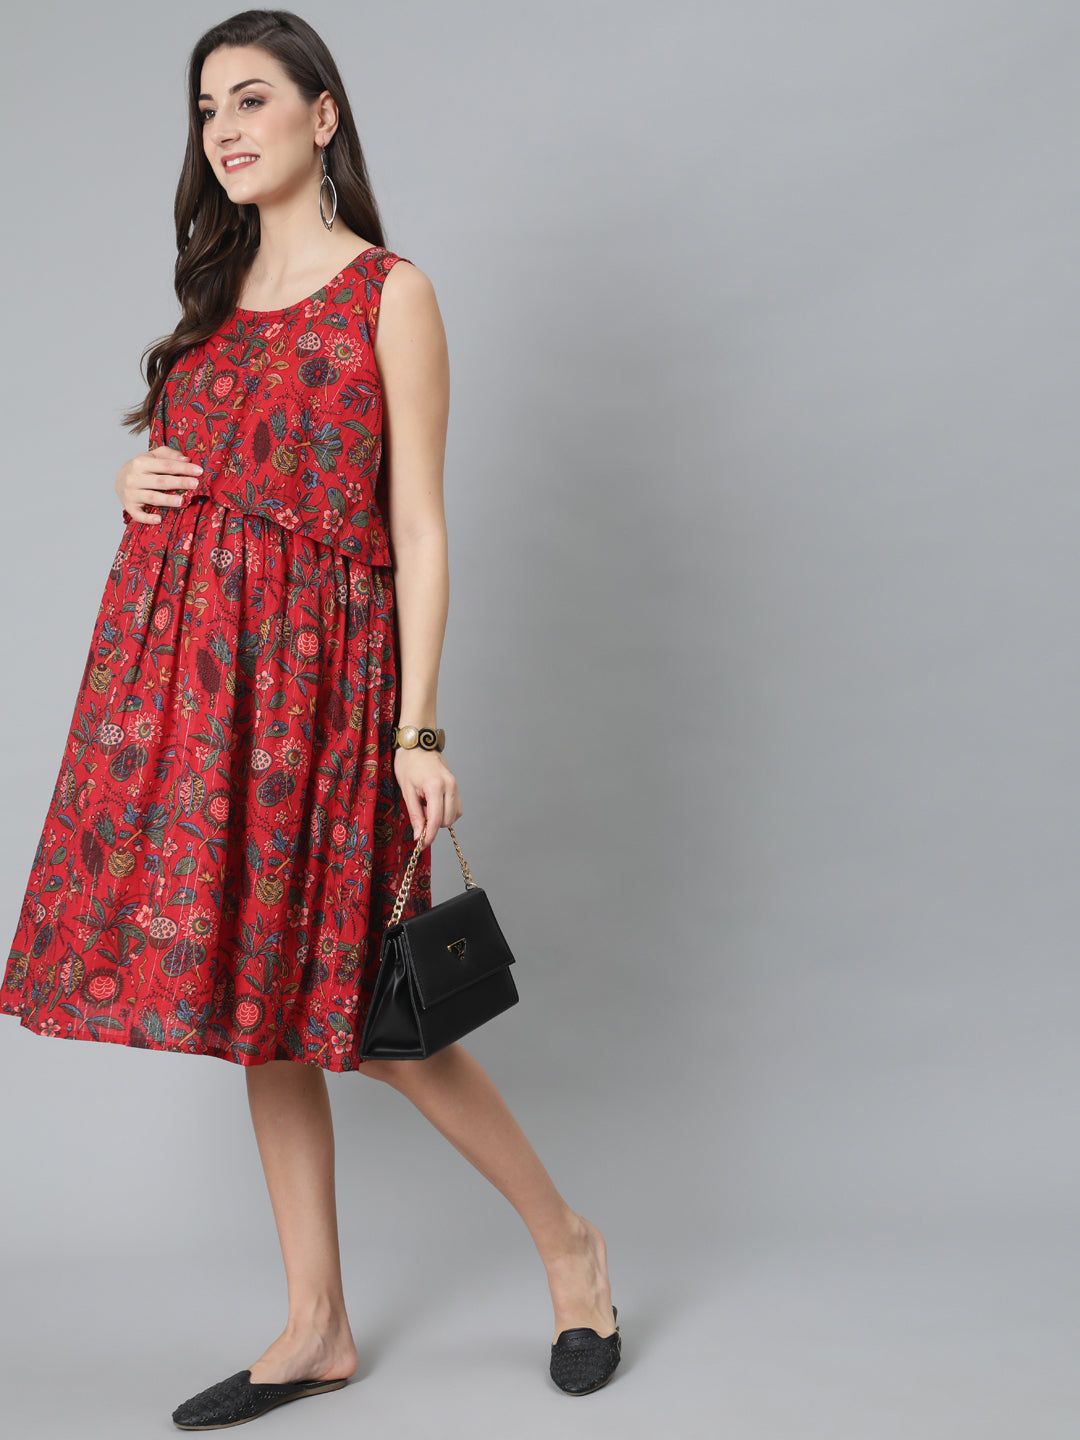 Women's Red Floral Print Dress - Aks